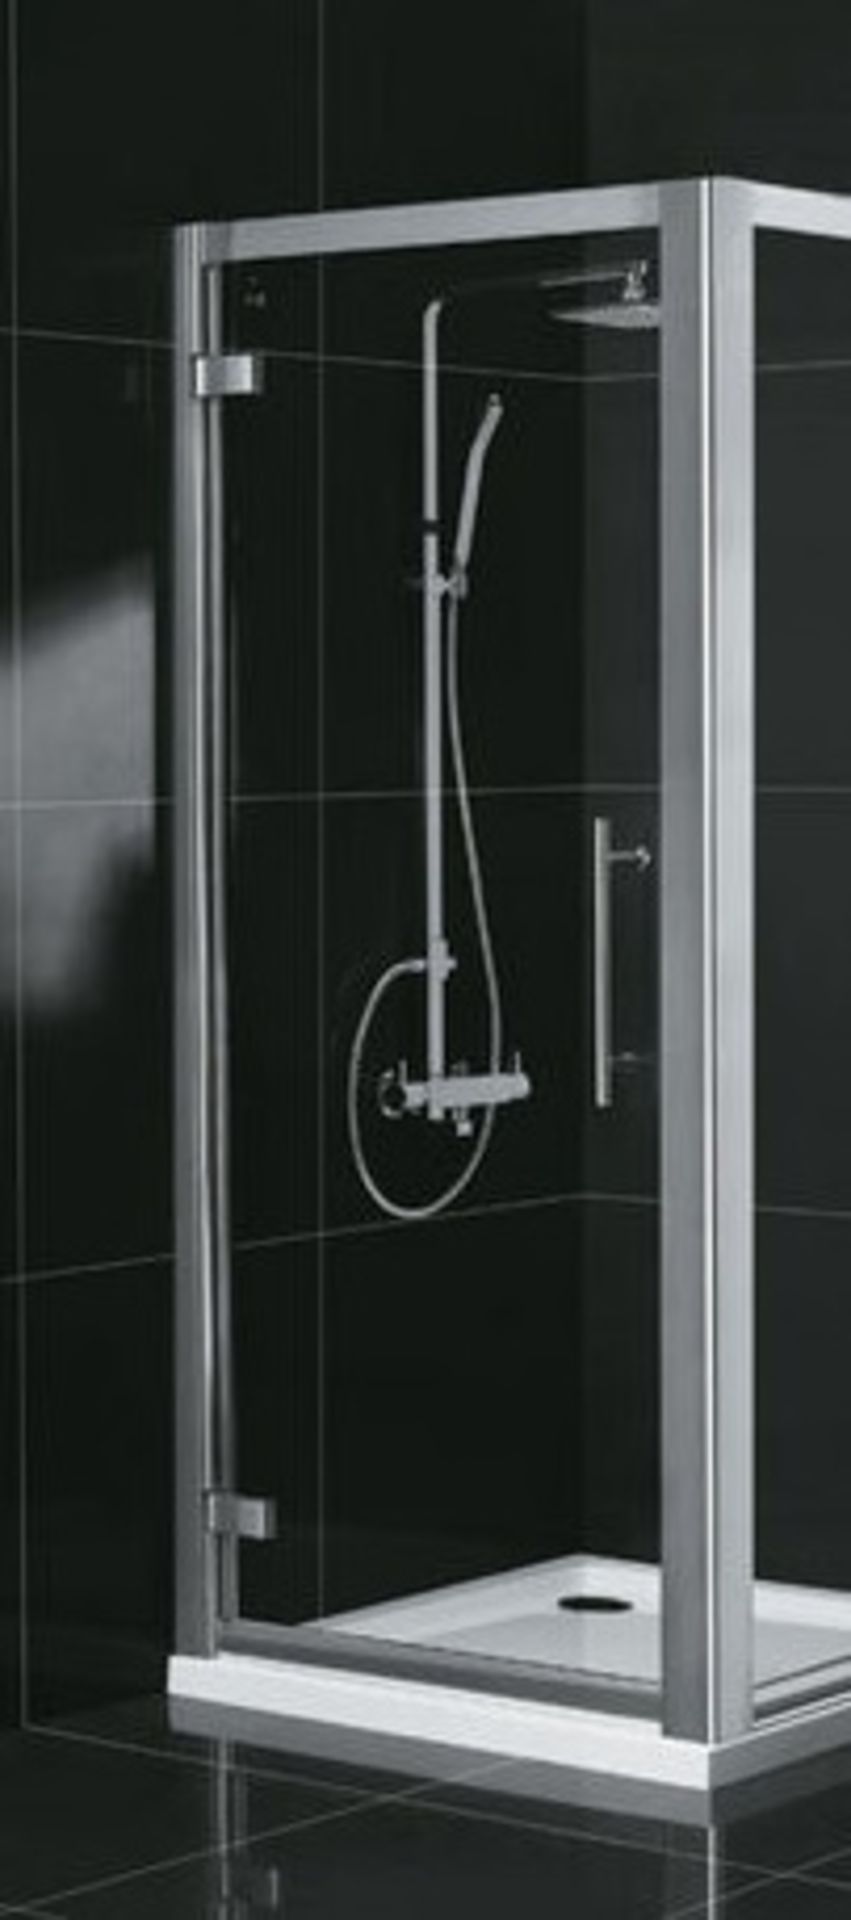 5 x Vogue AQUA LATUS 800mm Hinged Shower Doors - Polished Chrome Finish - 6mm Clear Glass - Brand